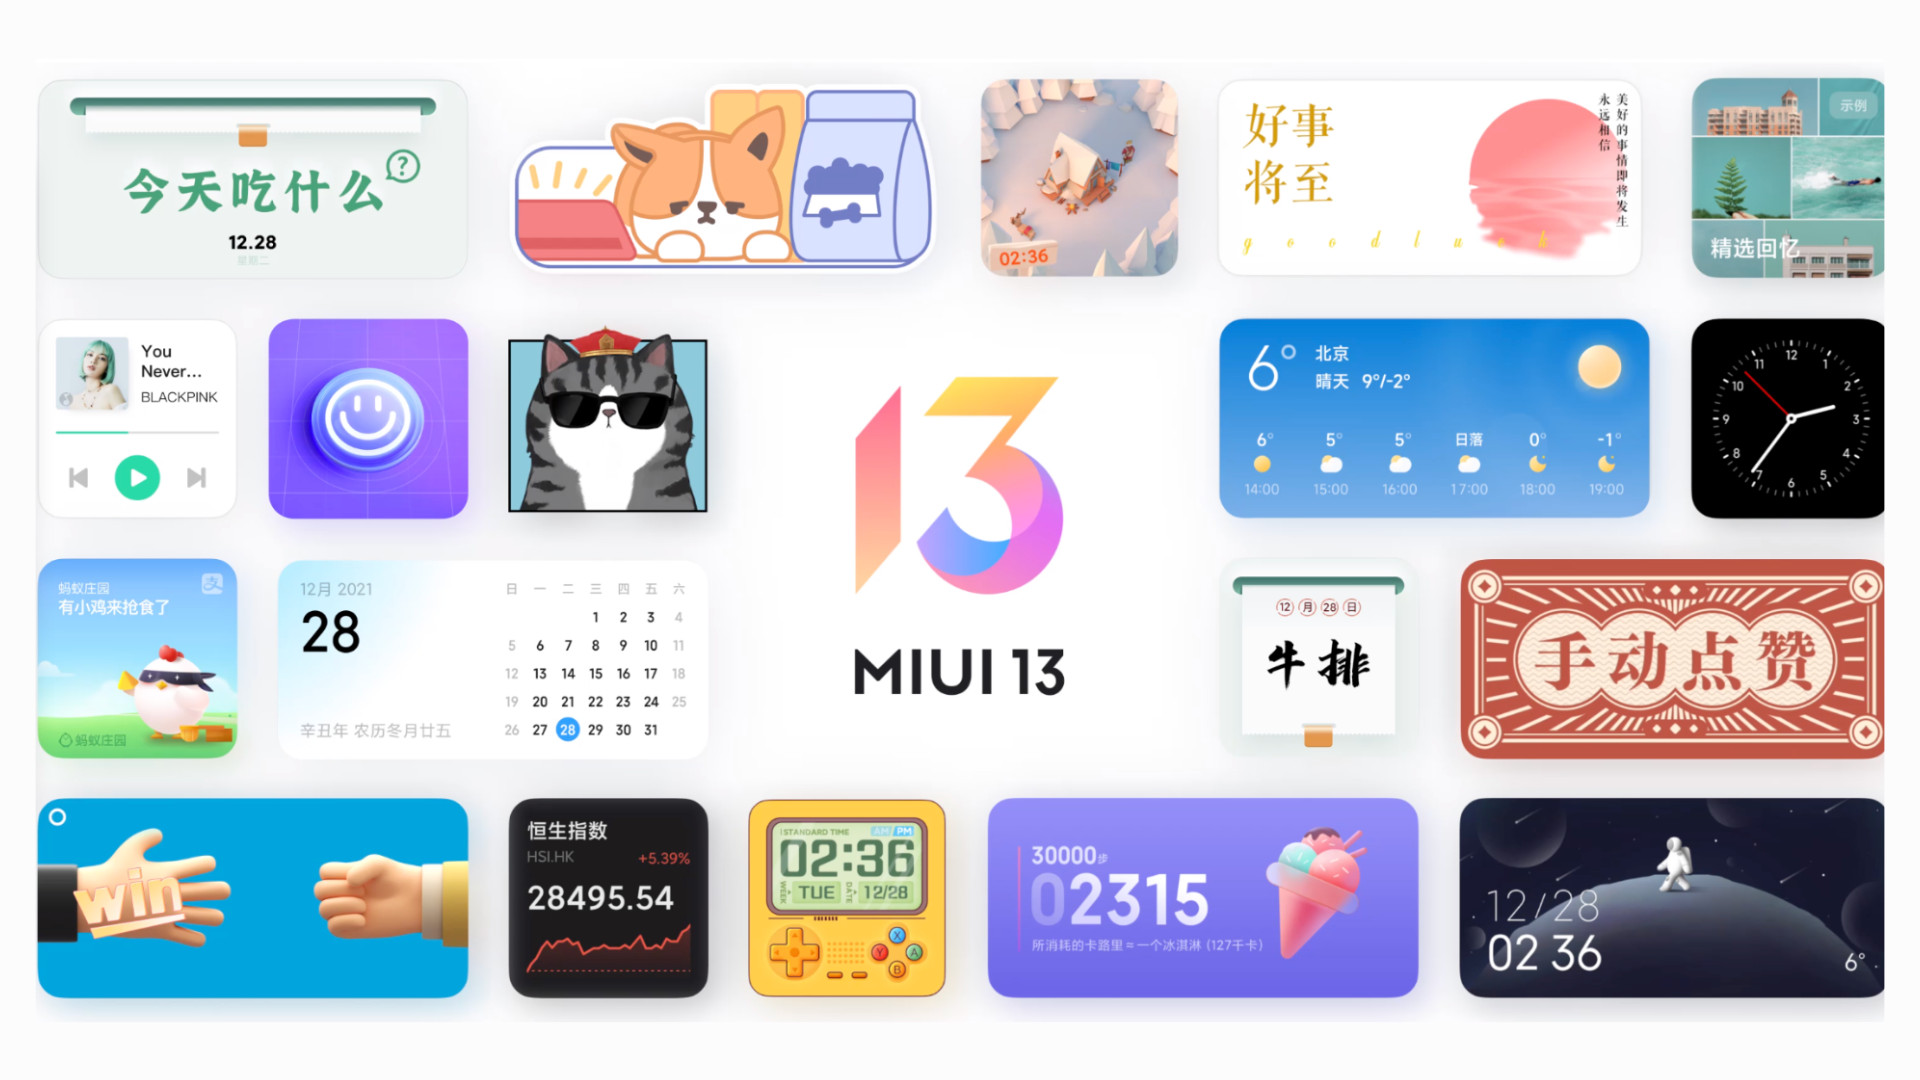 Sehr alte Xiaomi Smartphones haben die MIUI 13 Experience Firmware